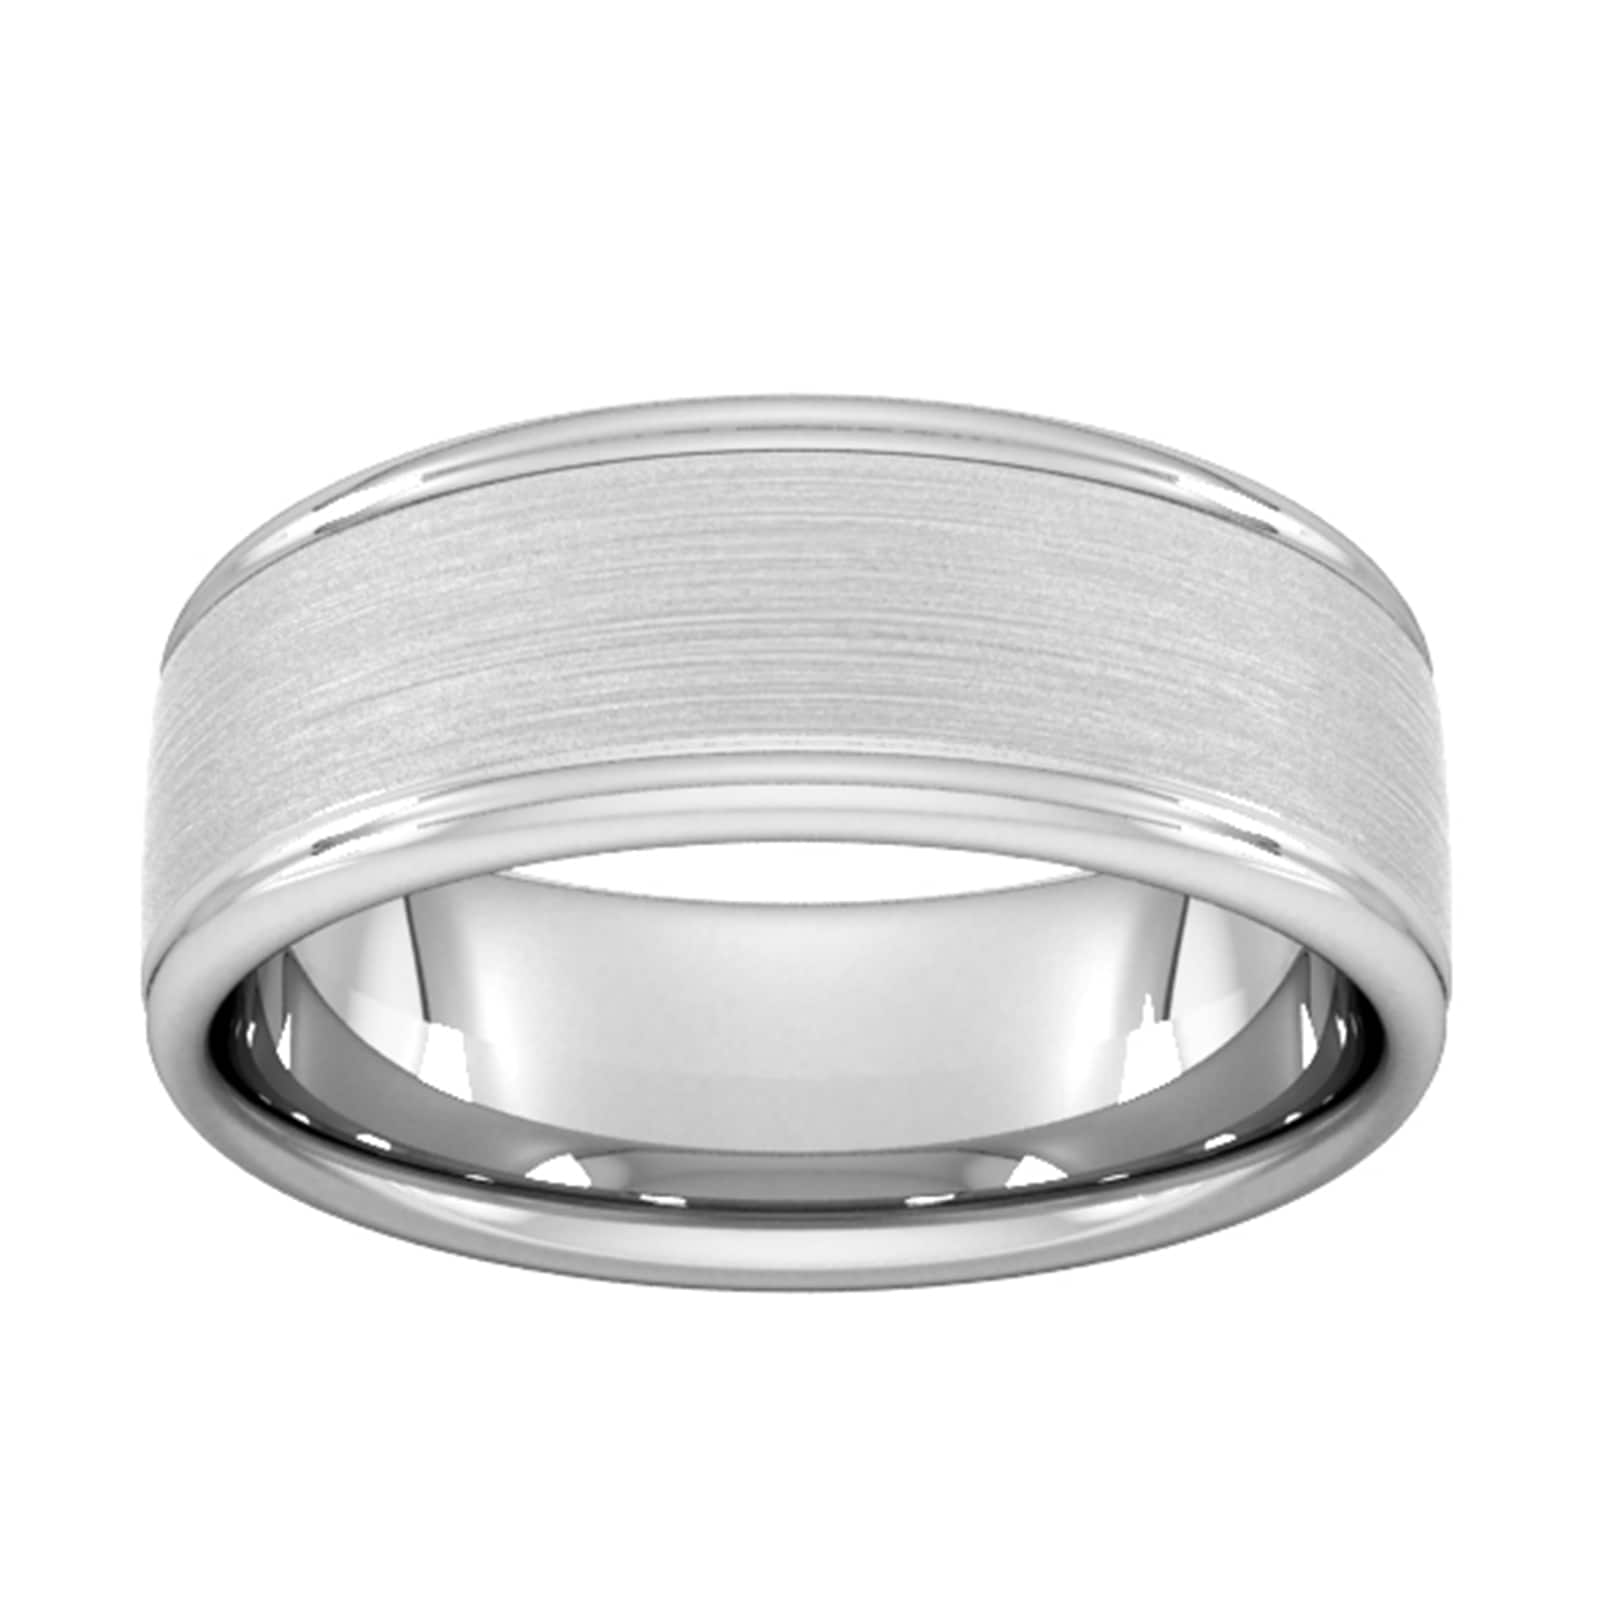 8mm Slight Court Standard Matt Centre With Grooves Wedding Ring In 9 Carat White Gold - Ring Size N